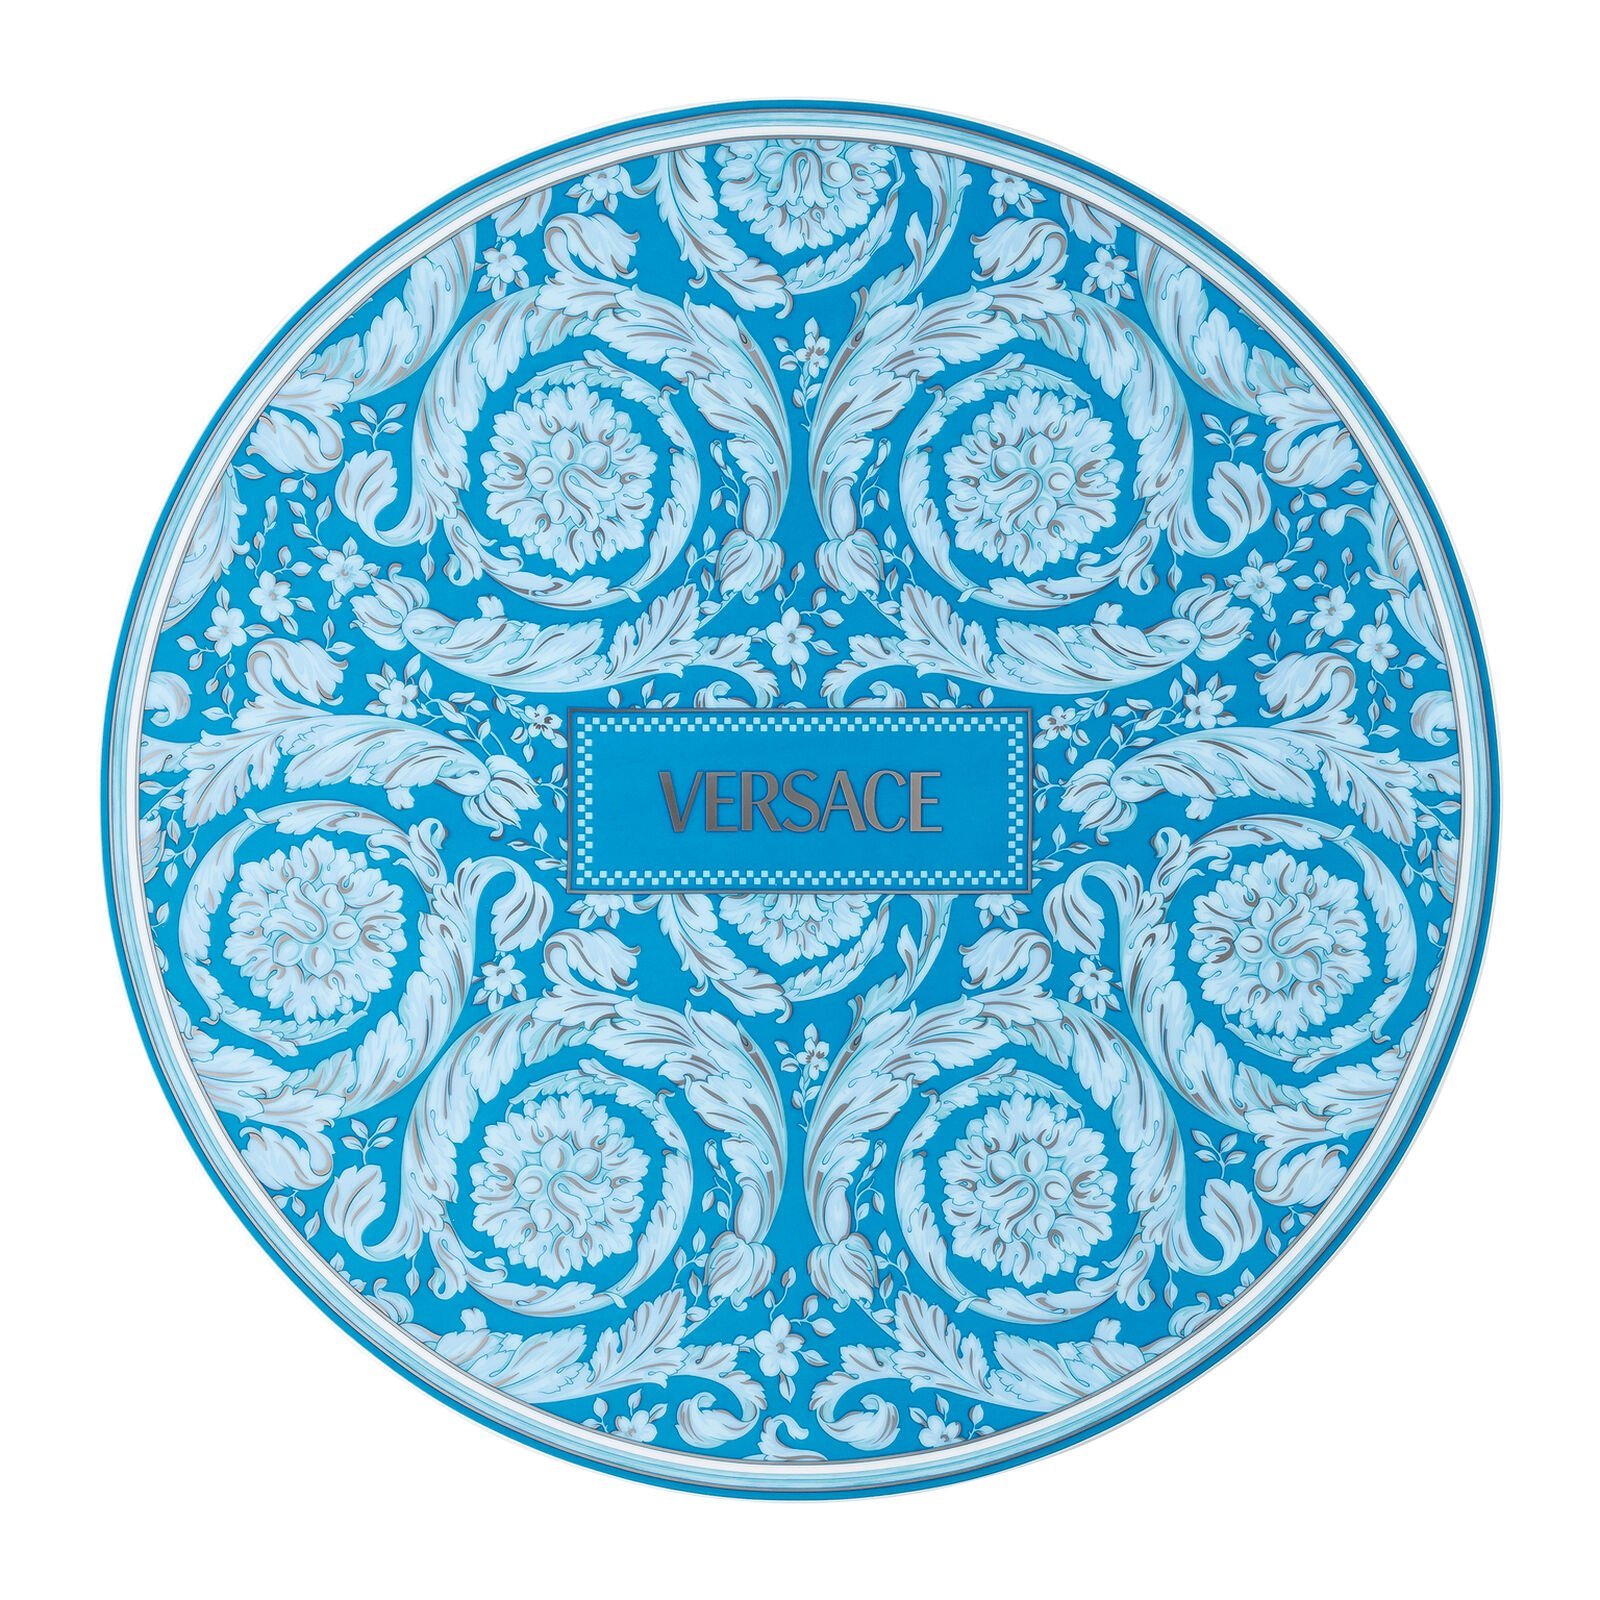 Versace Rosenthal Barocco Barocco Teal service plate